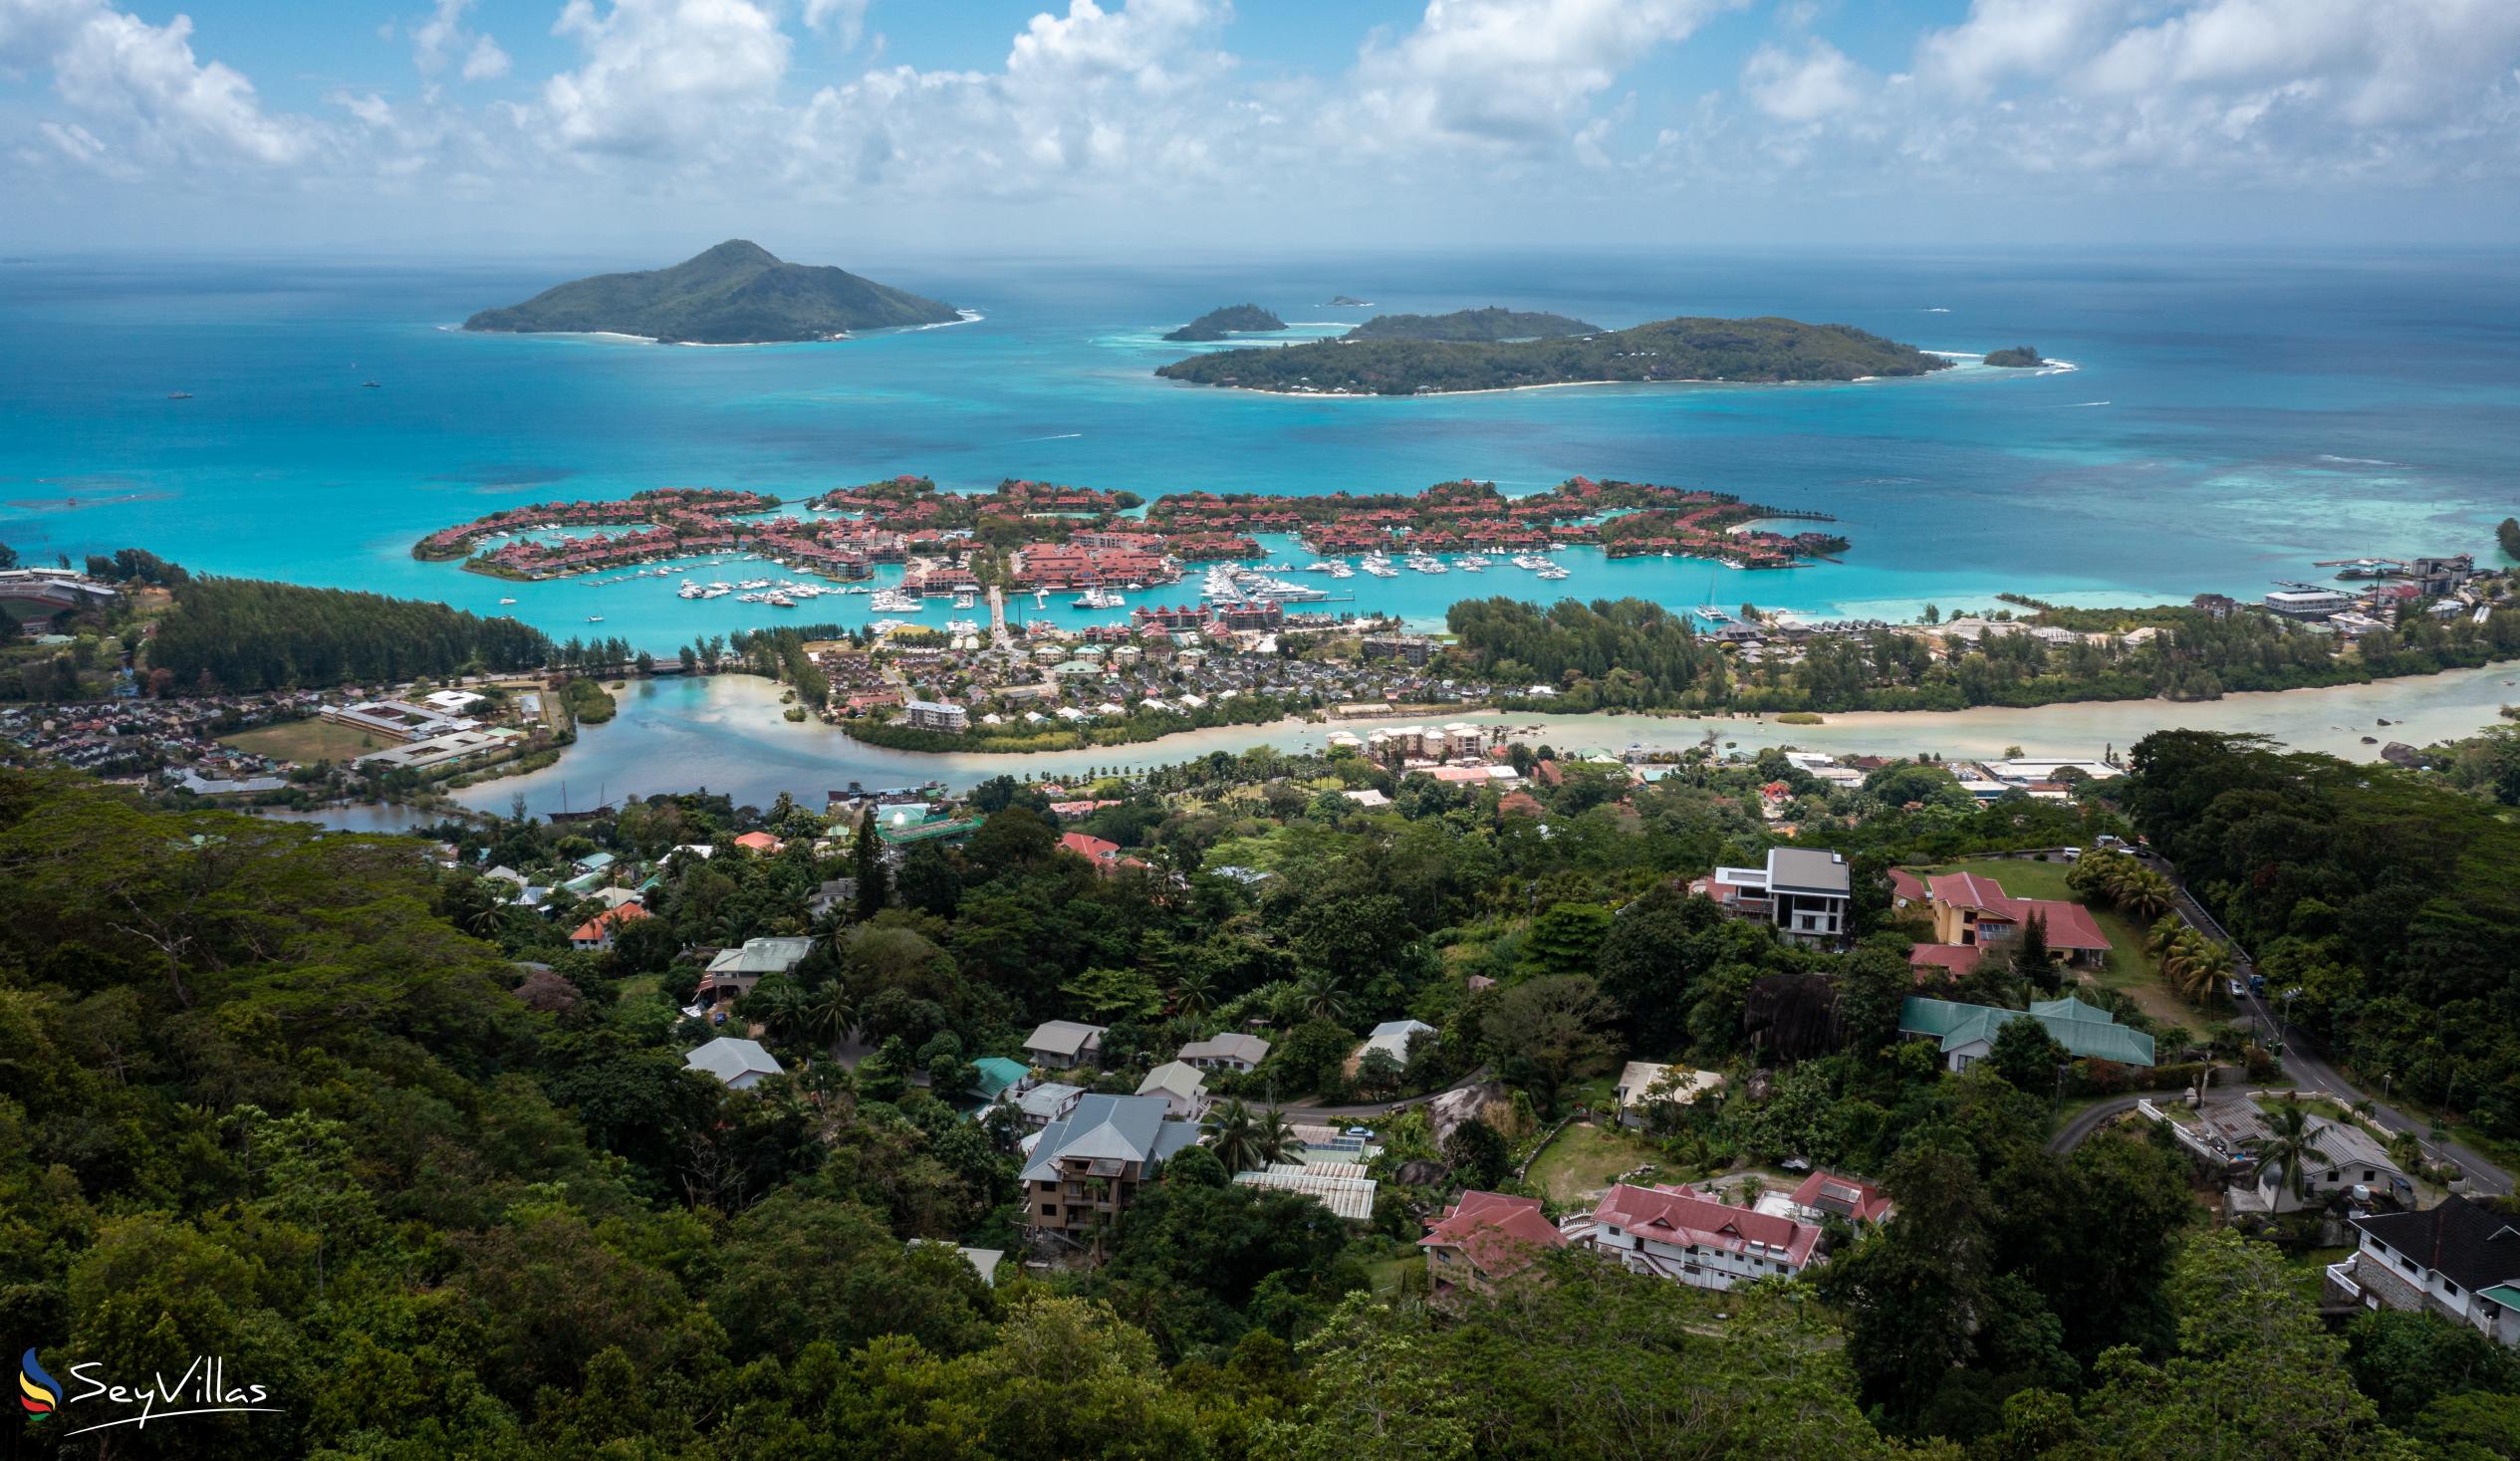 Foto 34: Cliffhanger Villas - Posizione - Mahé (Seychelles)